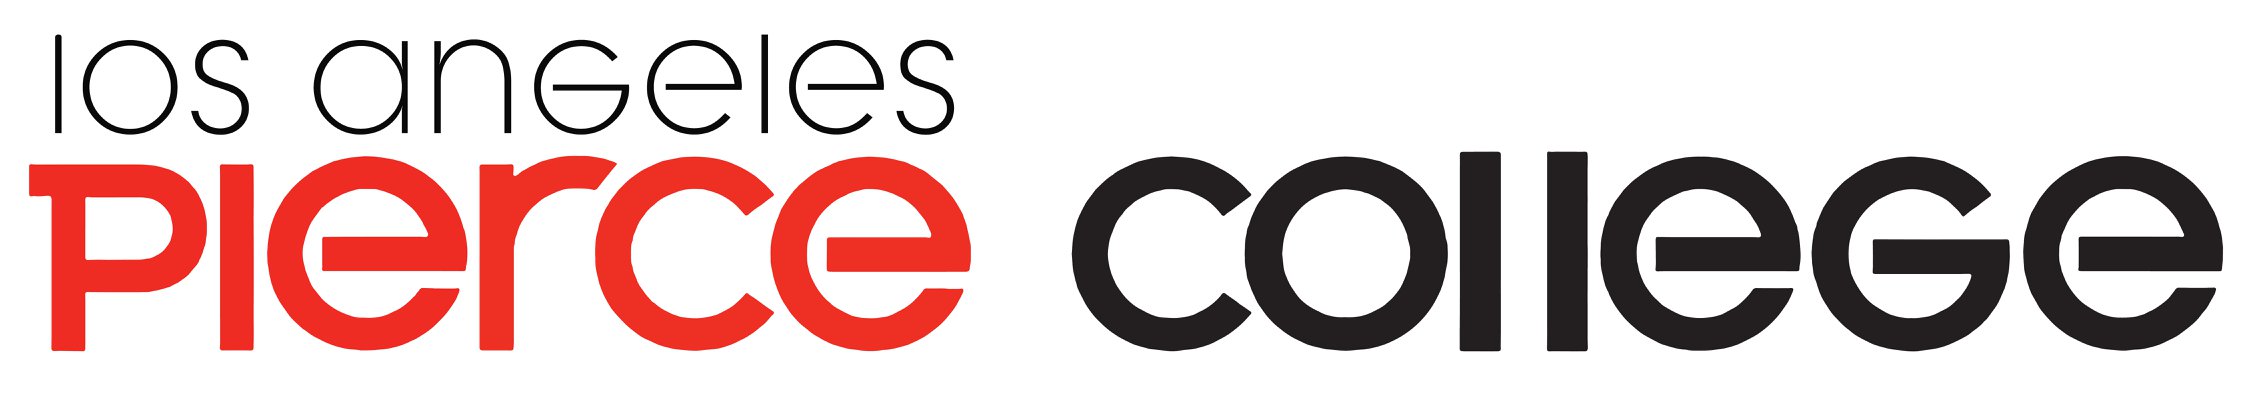 Pierce College Student Store Logo